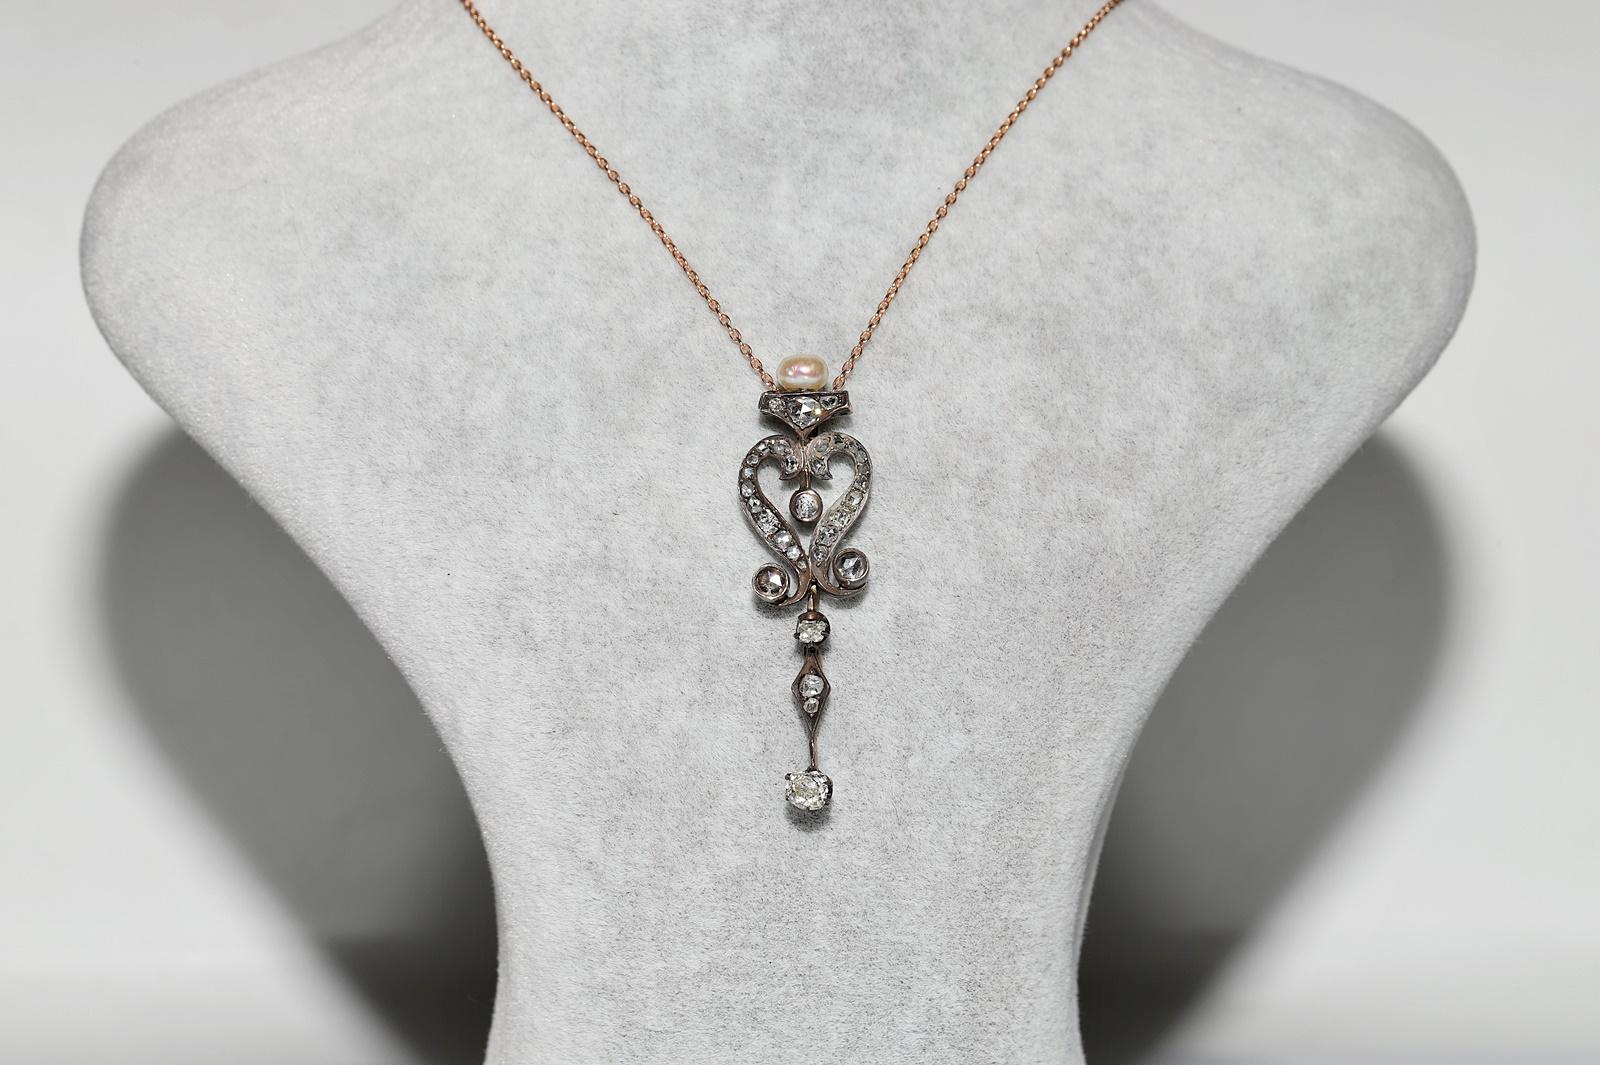 Antique Circa 1900s 8k Gold Top Silver Natural Diamond Pendant Necklace For Sale 2